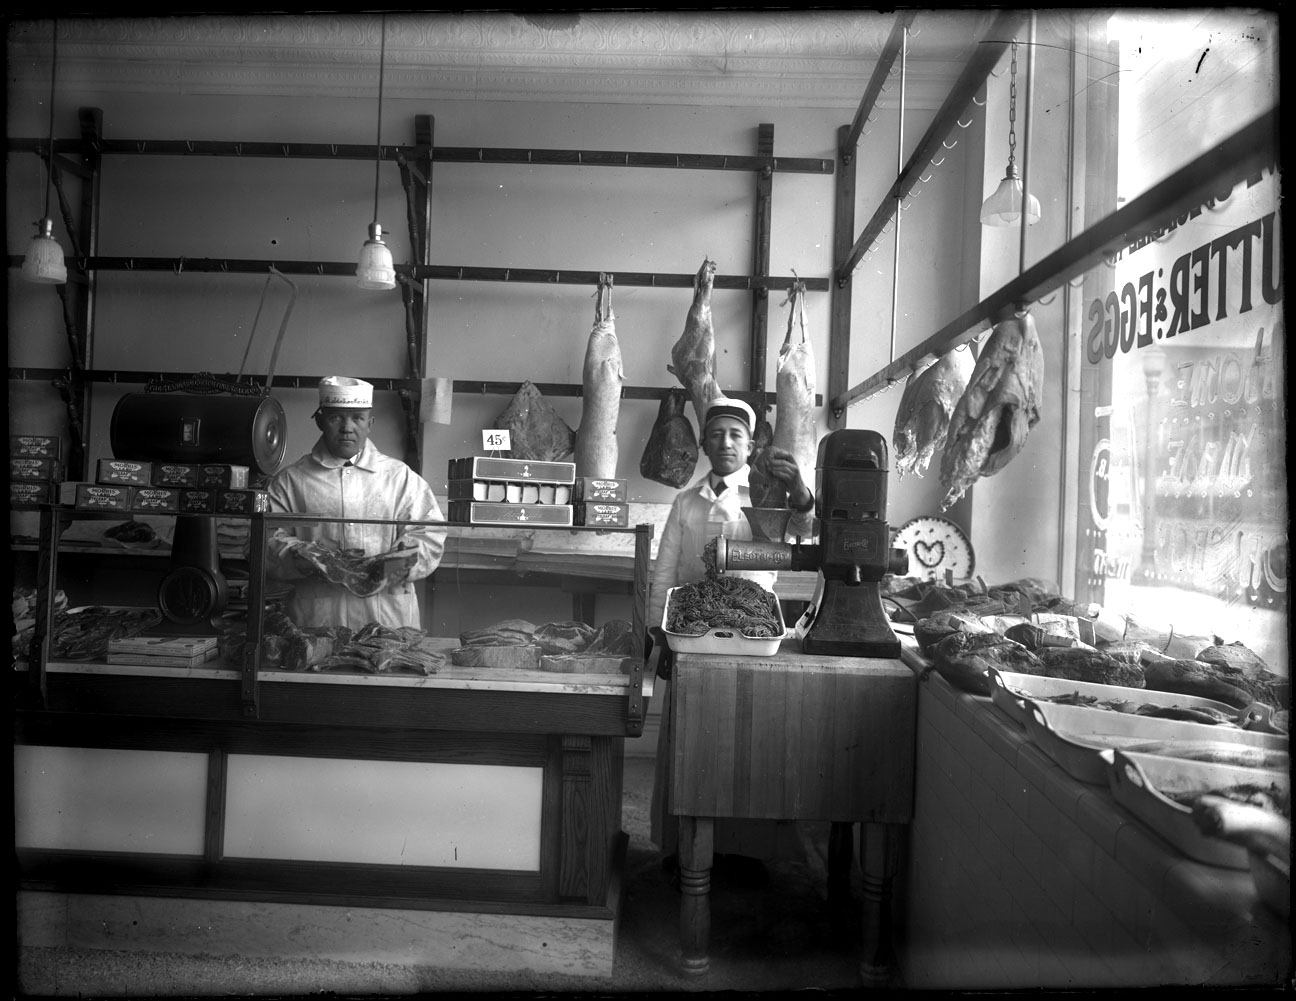 Butcher Shop c.1920 from original 4x5 glass plate negative